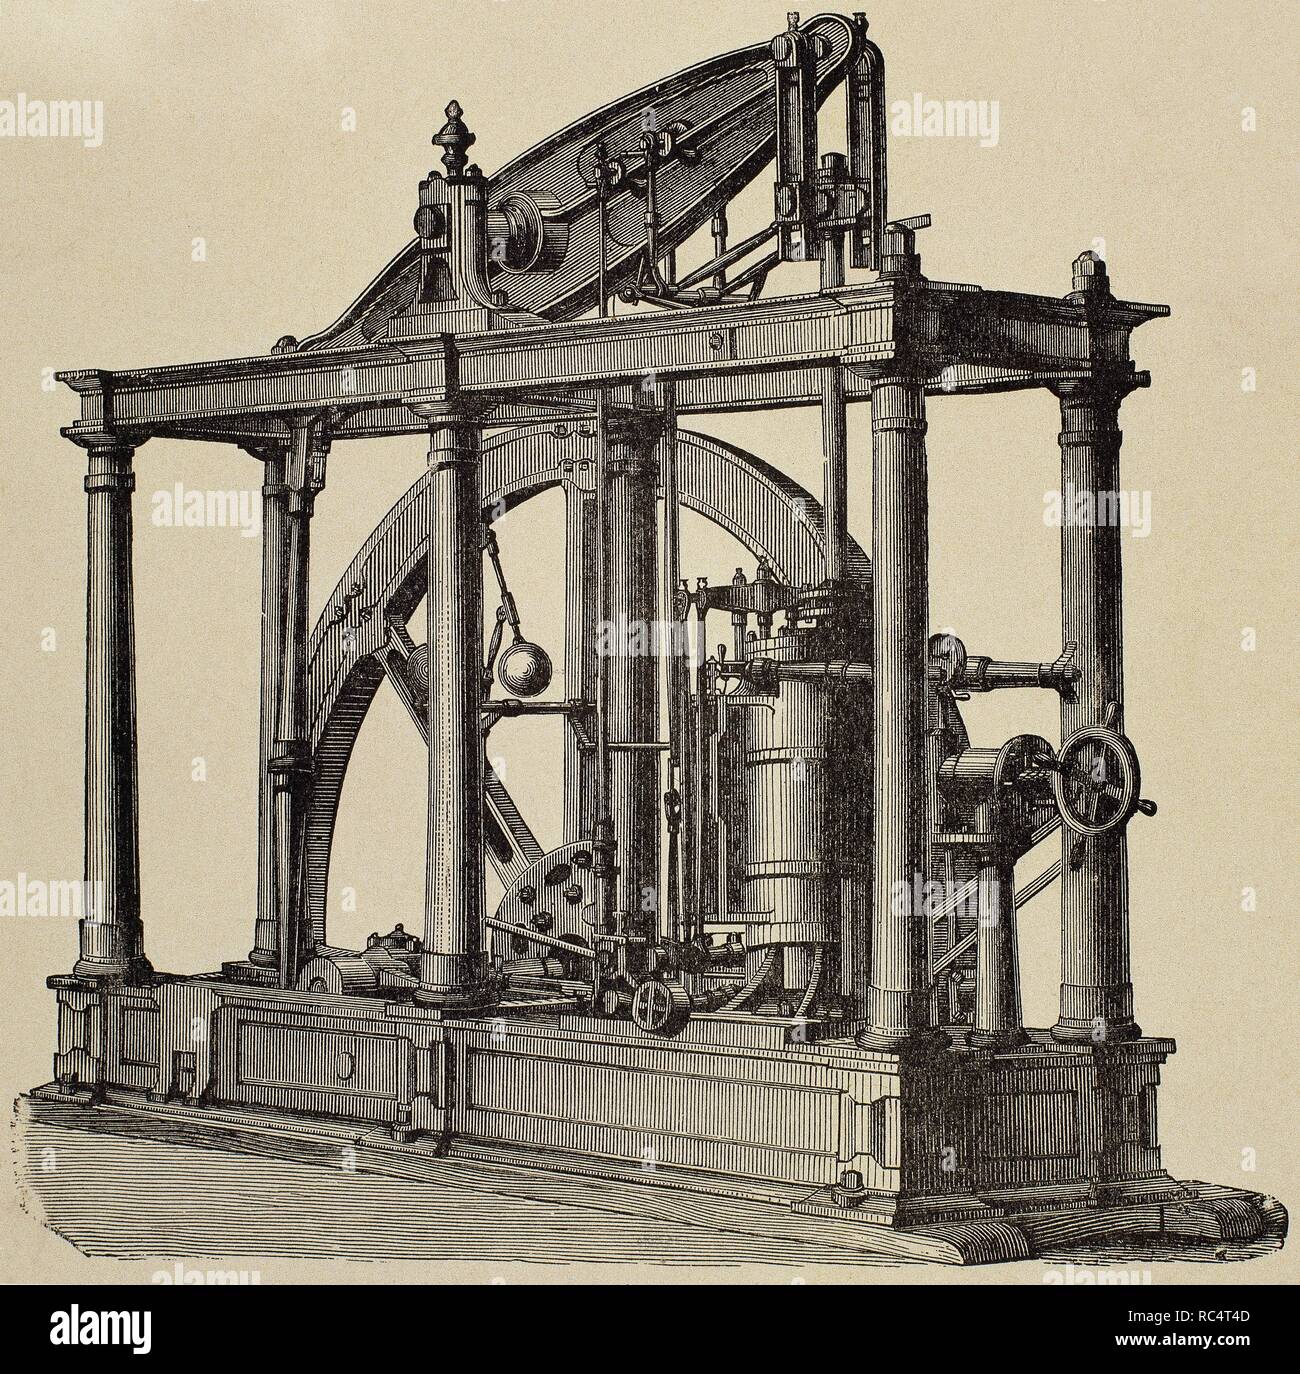 Watt Steam Engine by James Watt (1736-1819). Engraving, 19th century. Stock Photo